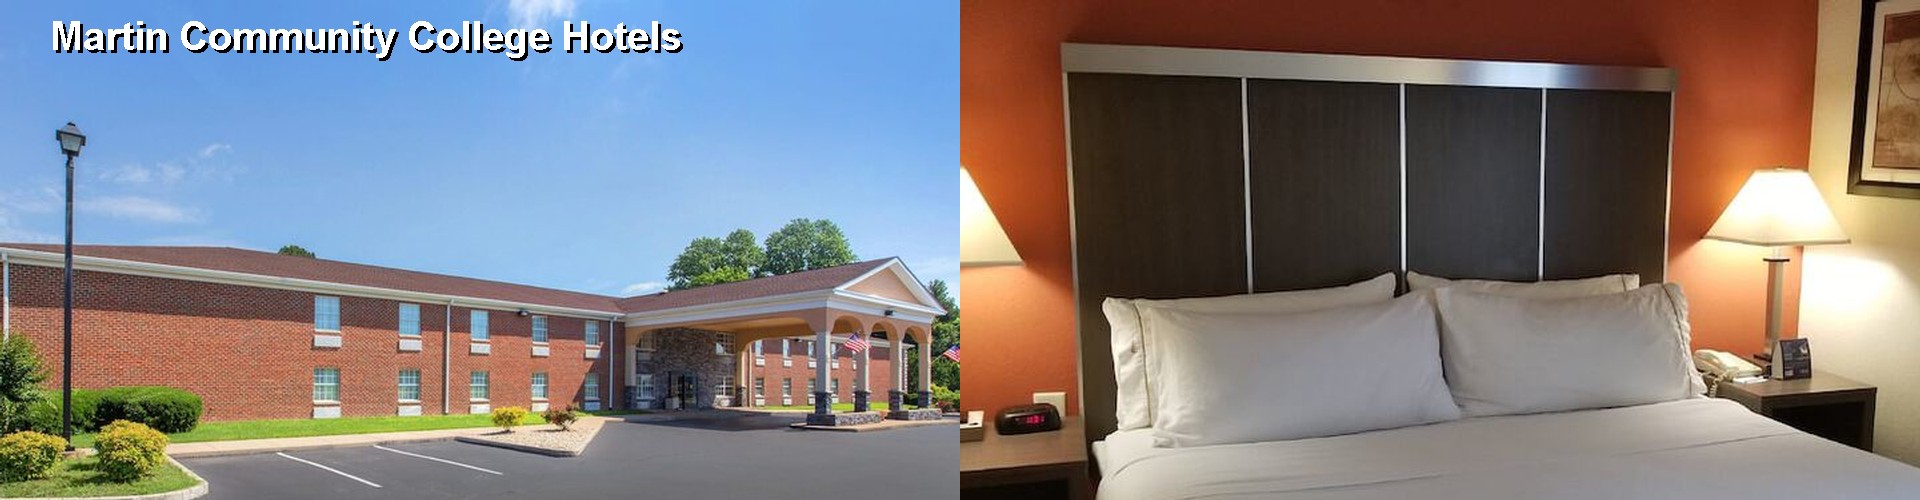 4 Best Hotels near Martin Community College